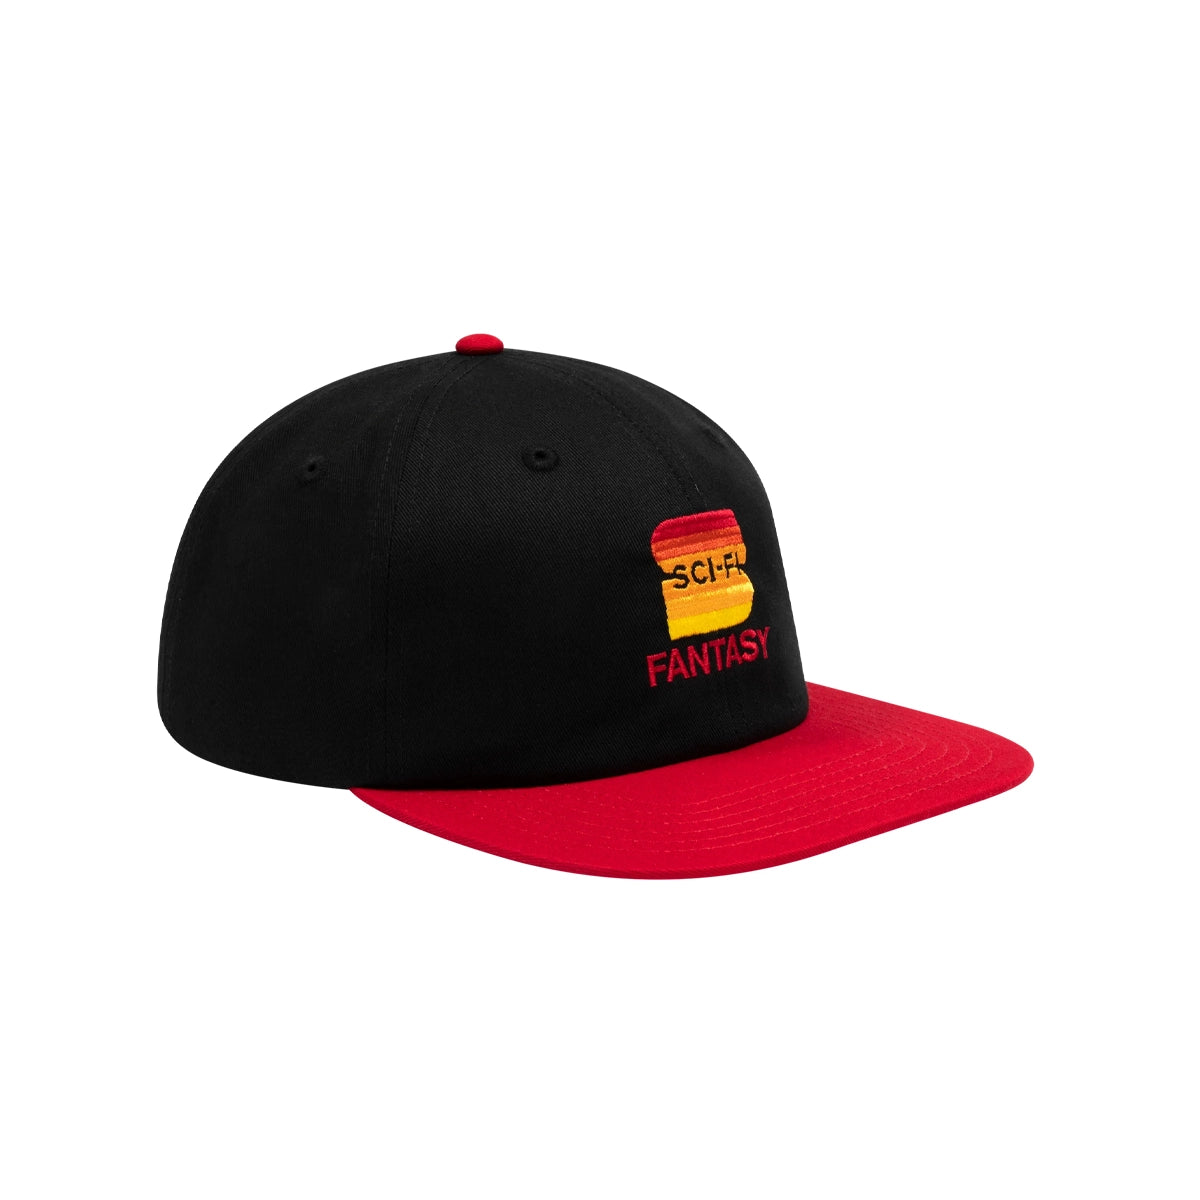 Sci-Fi Fantasy S Hat - black/red